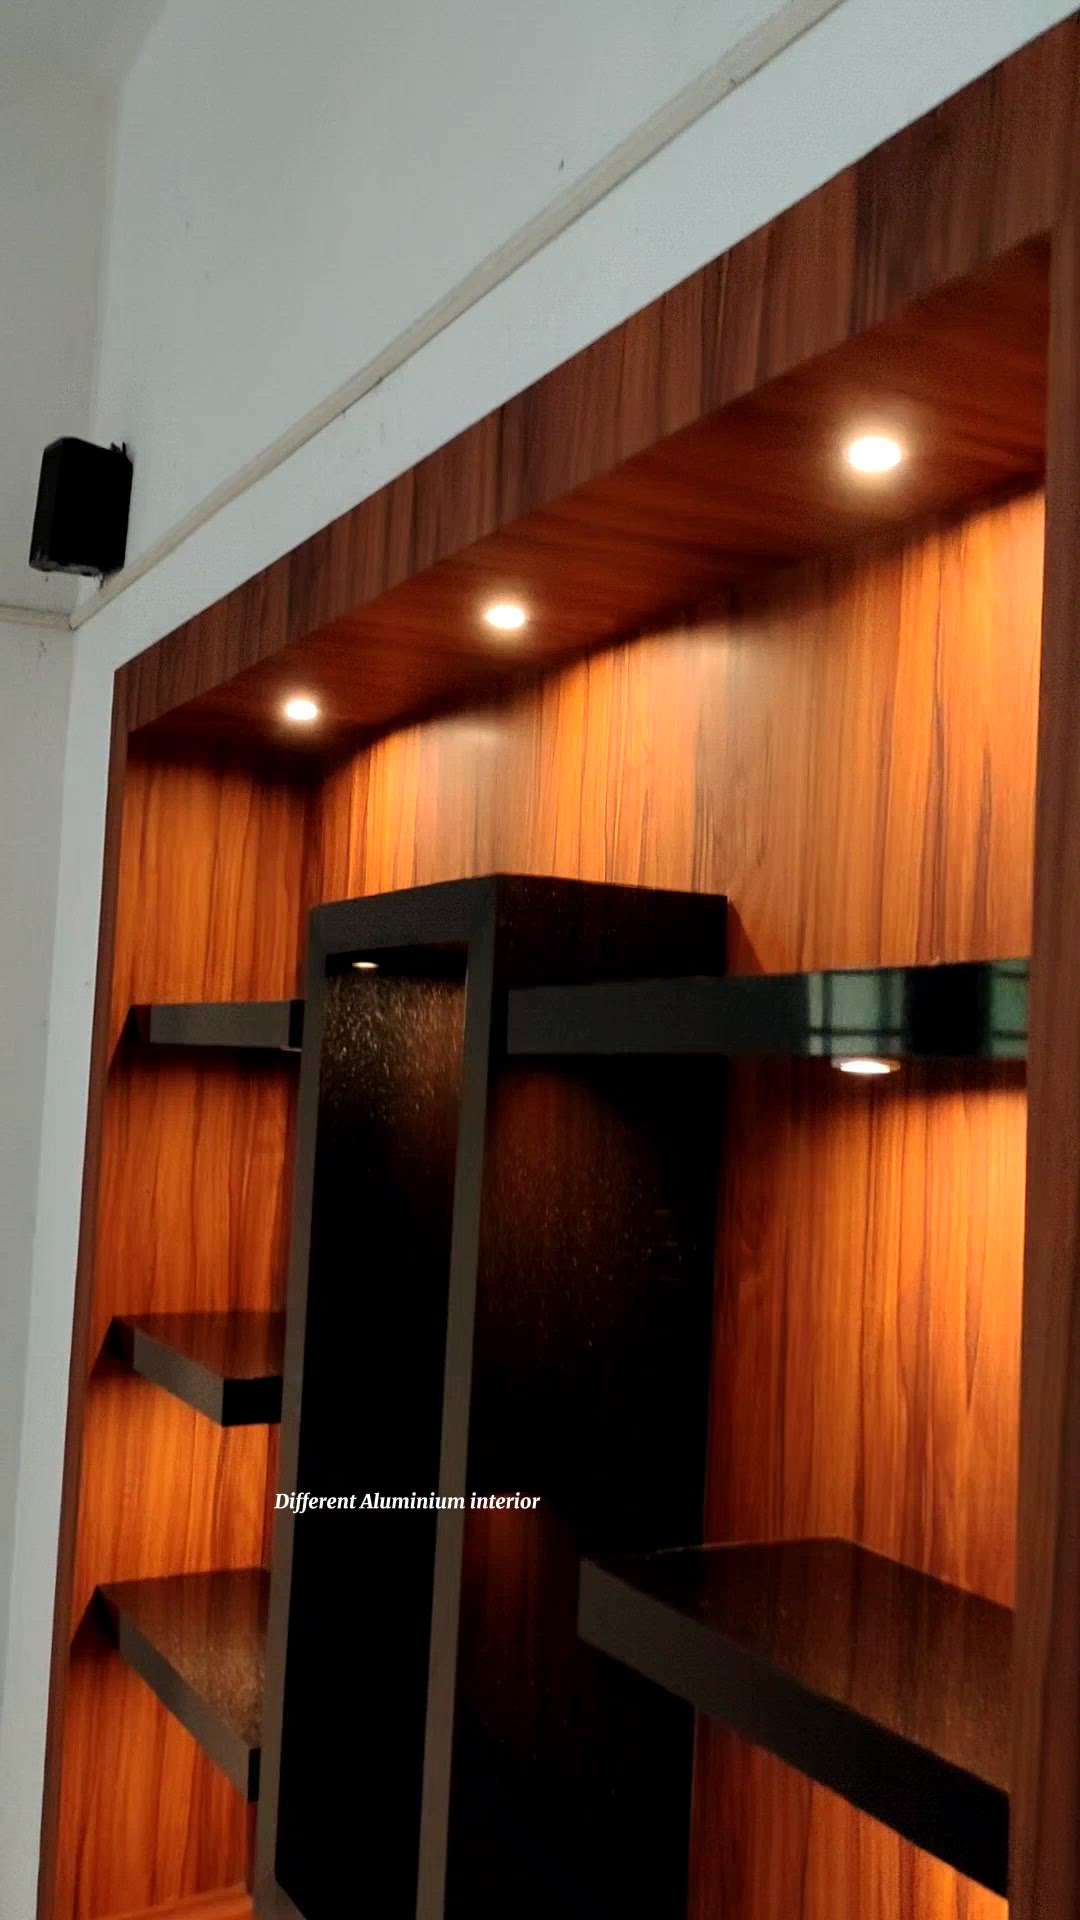 aluminium show case ✌️more details👉9946274303
#showcasedesign  #KeralaStyleHouse  #HomeDecor  #aluminiumfabrication  #interiortrendz